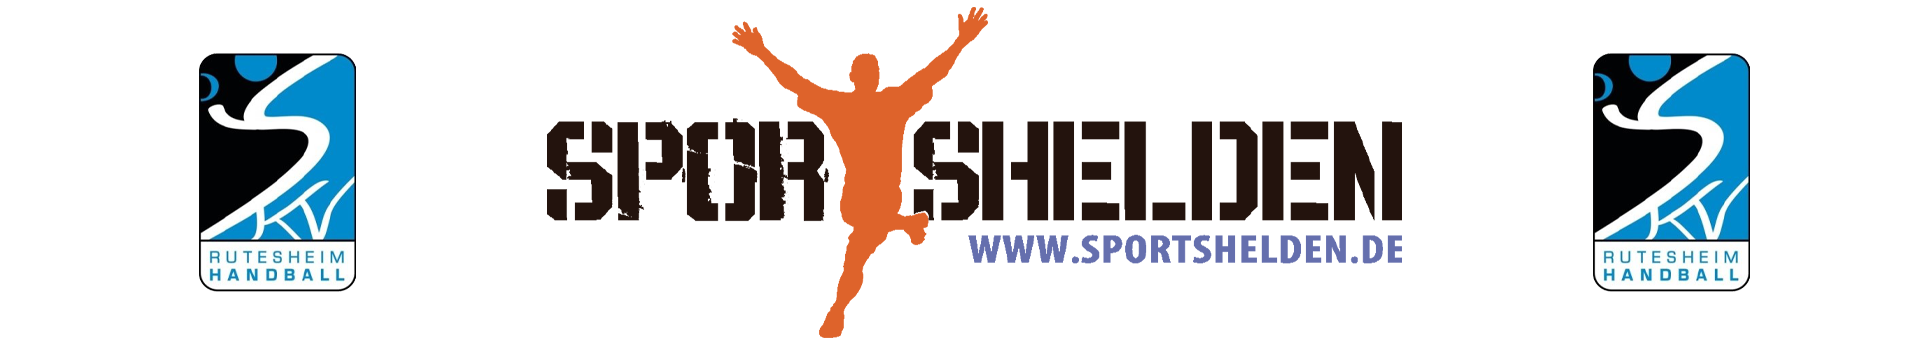 SKV Rutesheim Handball Title Image